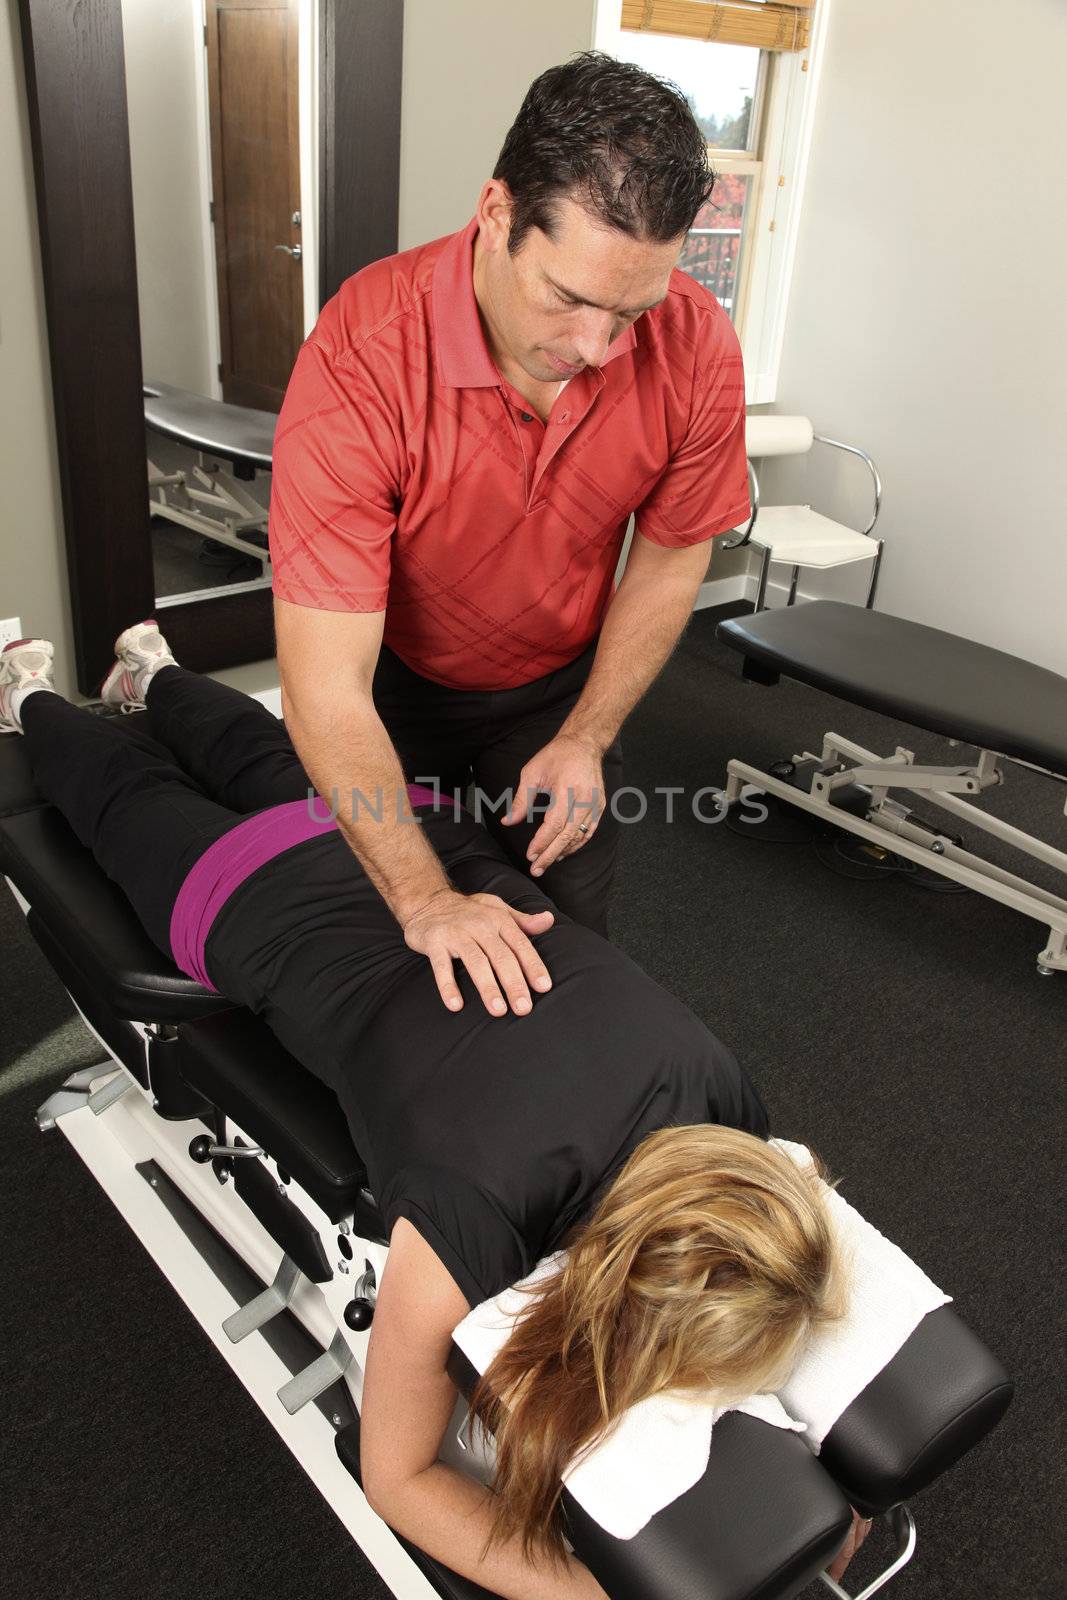 Chiropractor adjusting a female patient